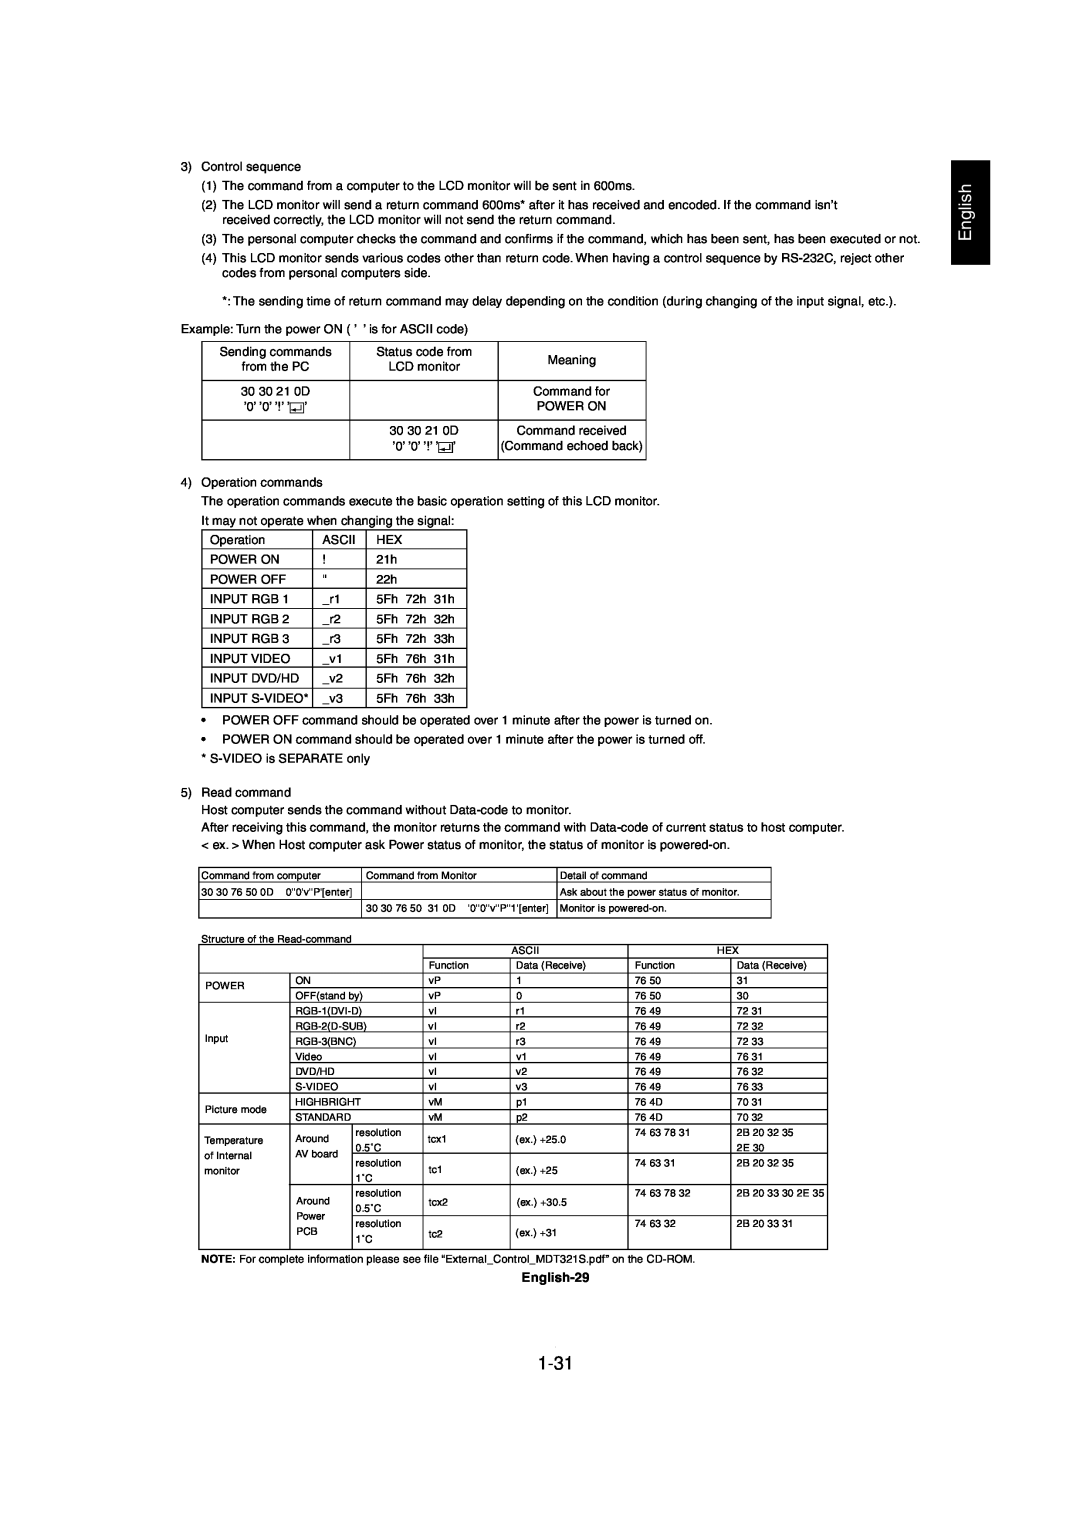 Mitsubishi Electronics MDT321S user manual 1-31, English-29, Standard 